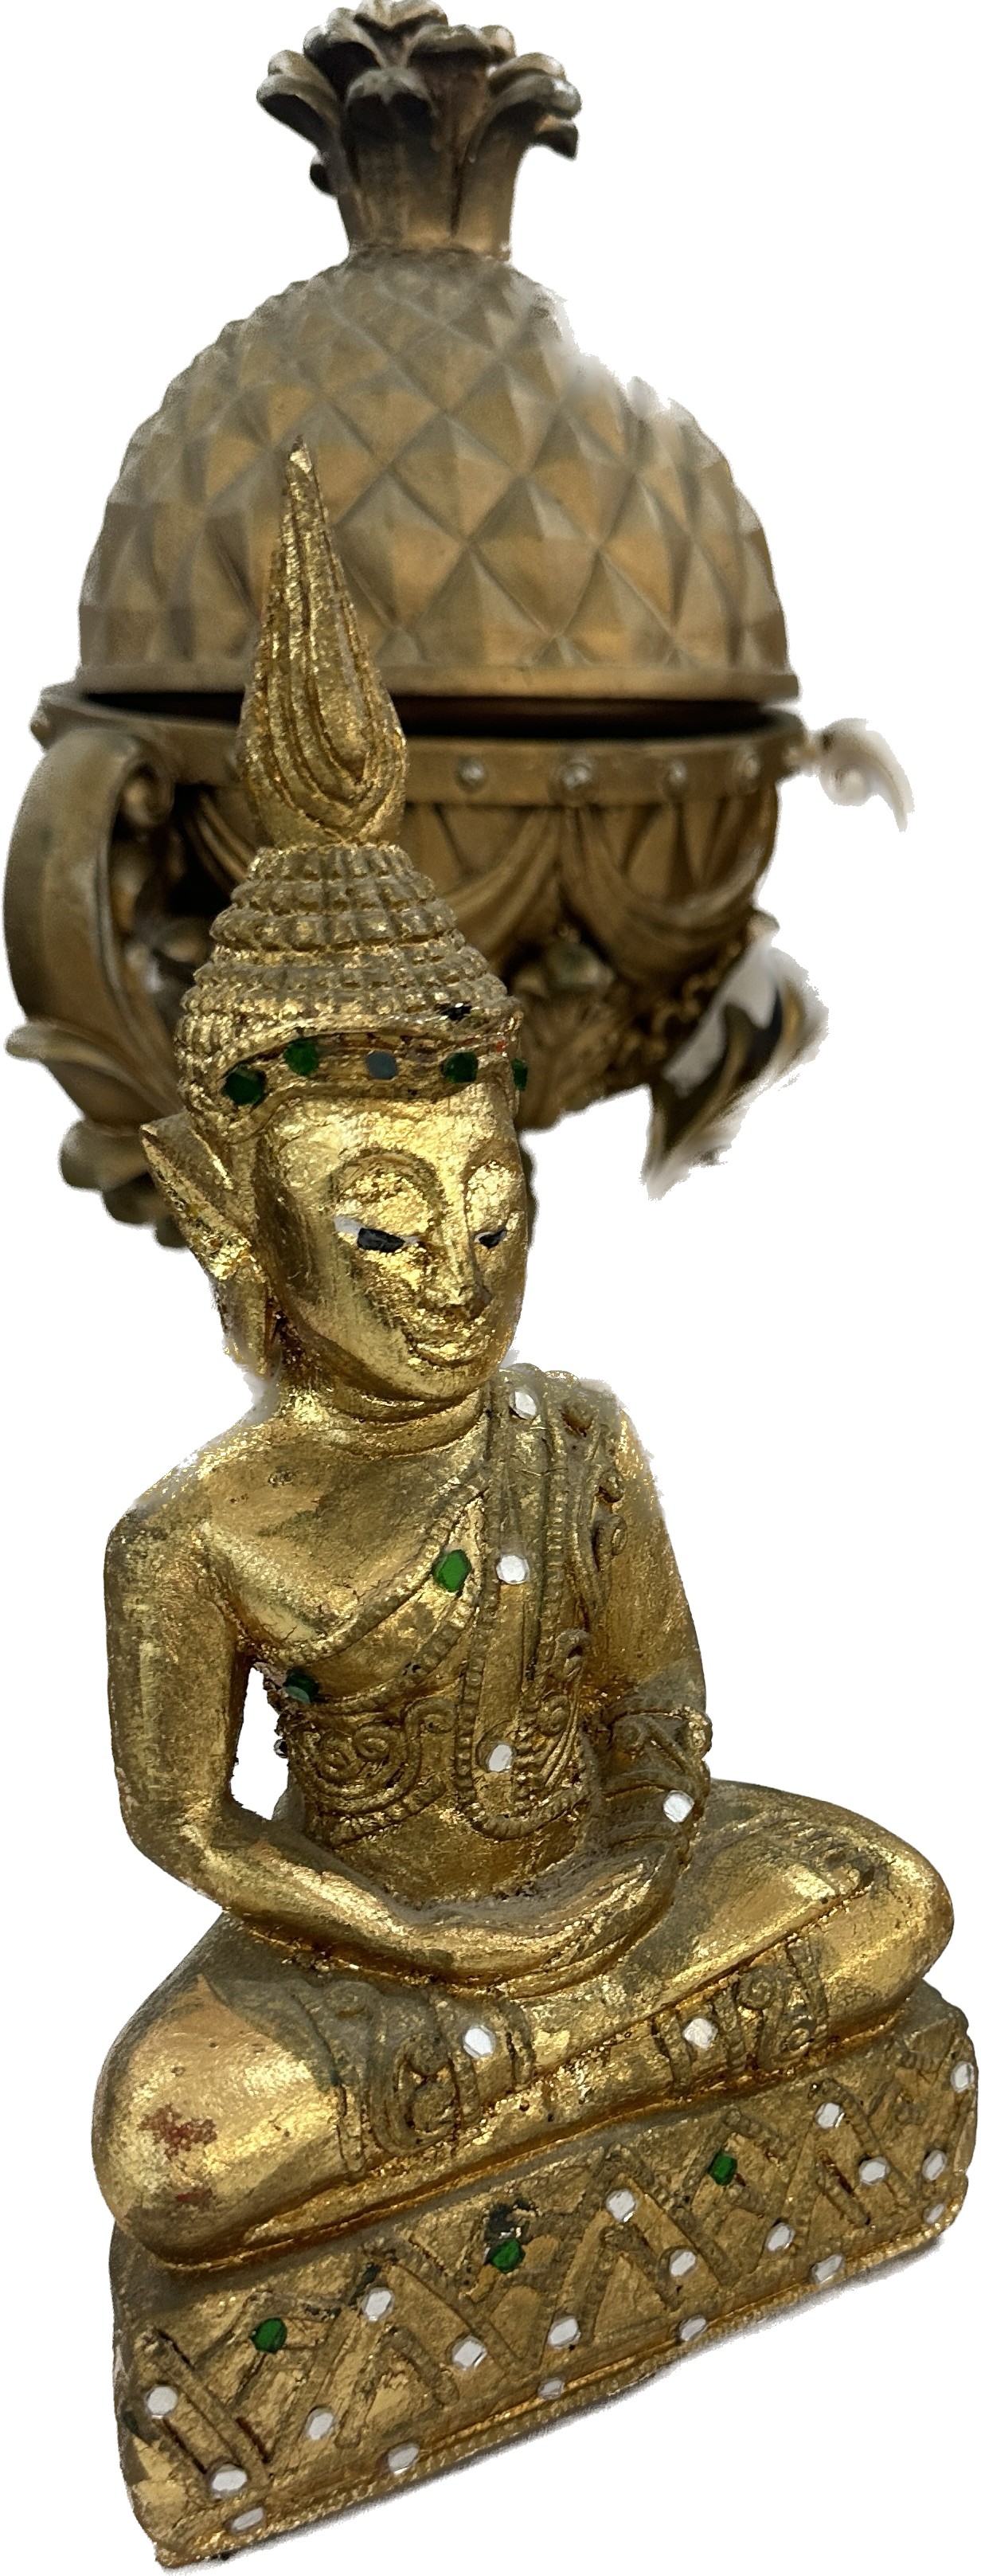 Decorative gold painted dragon ornament, elephant stool, lidded pineapple, buddha - Image 4 of 5